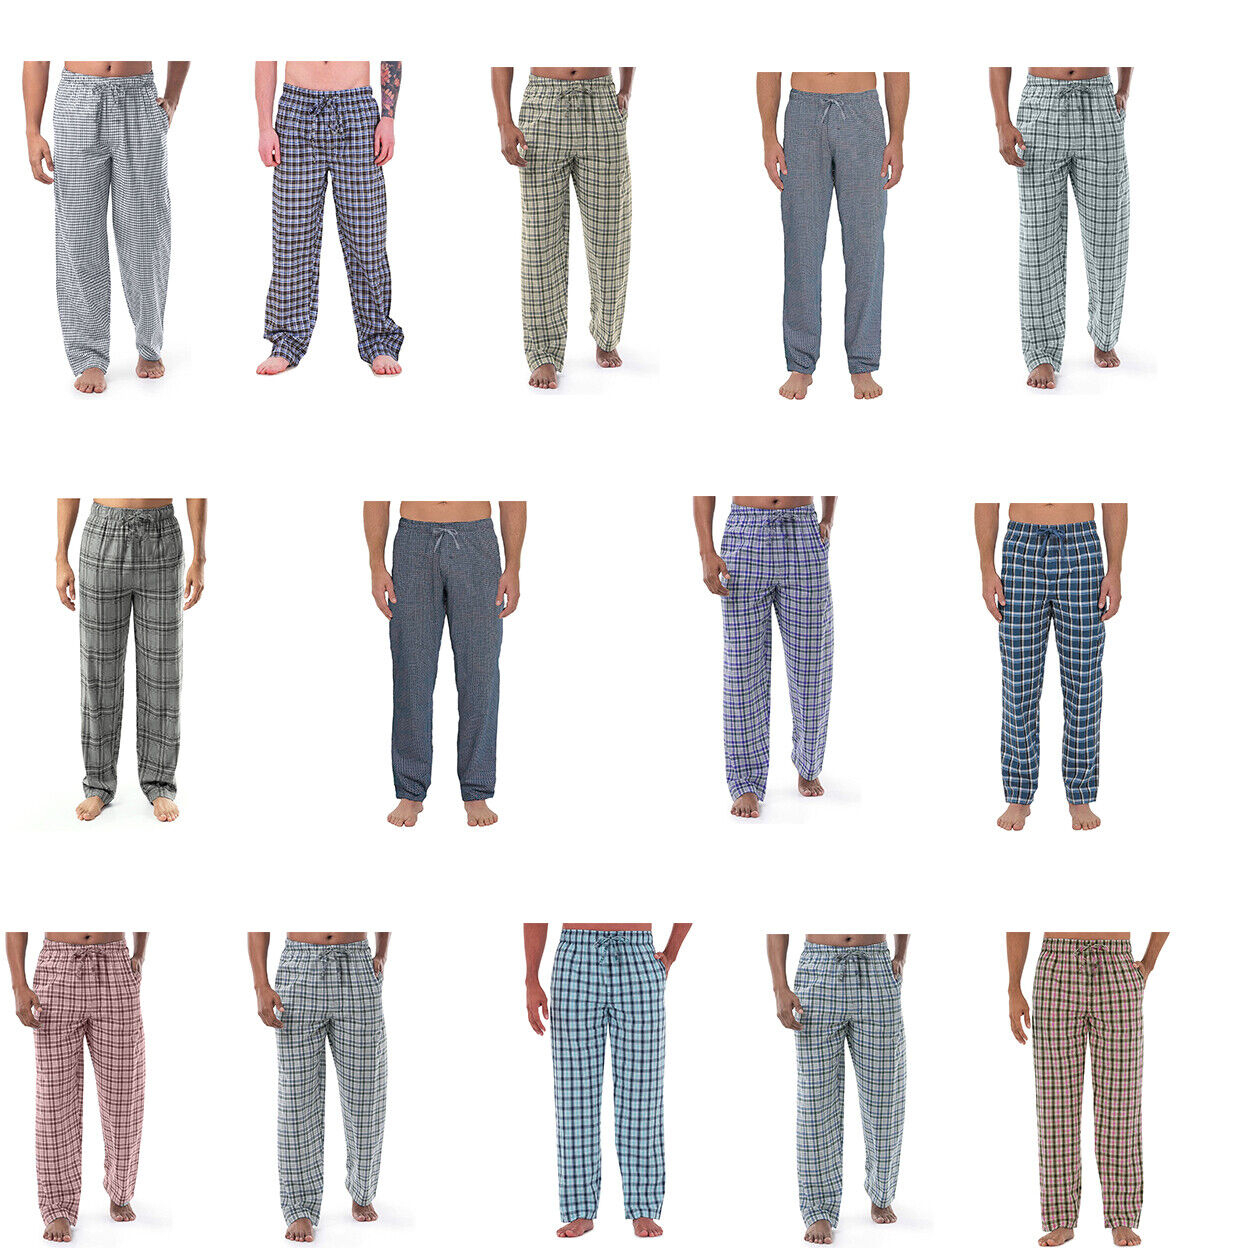 Men's Ultra-Soft Plaid Cotton Jersey Knit Comfy Sleep Lounge Pajama Pants - Grey, Small